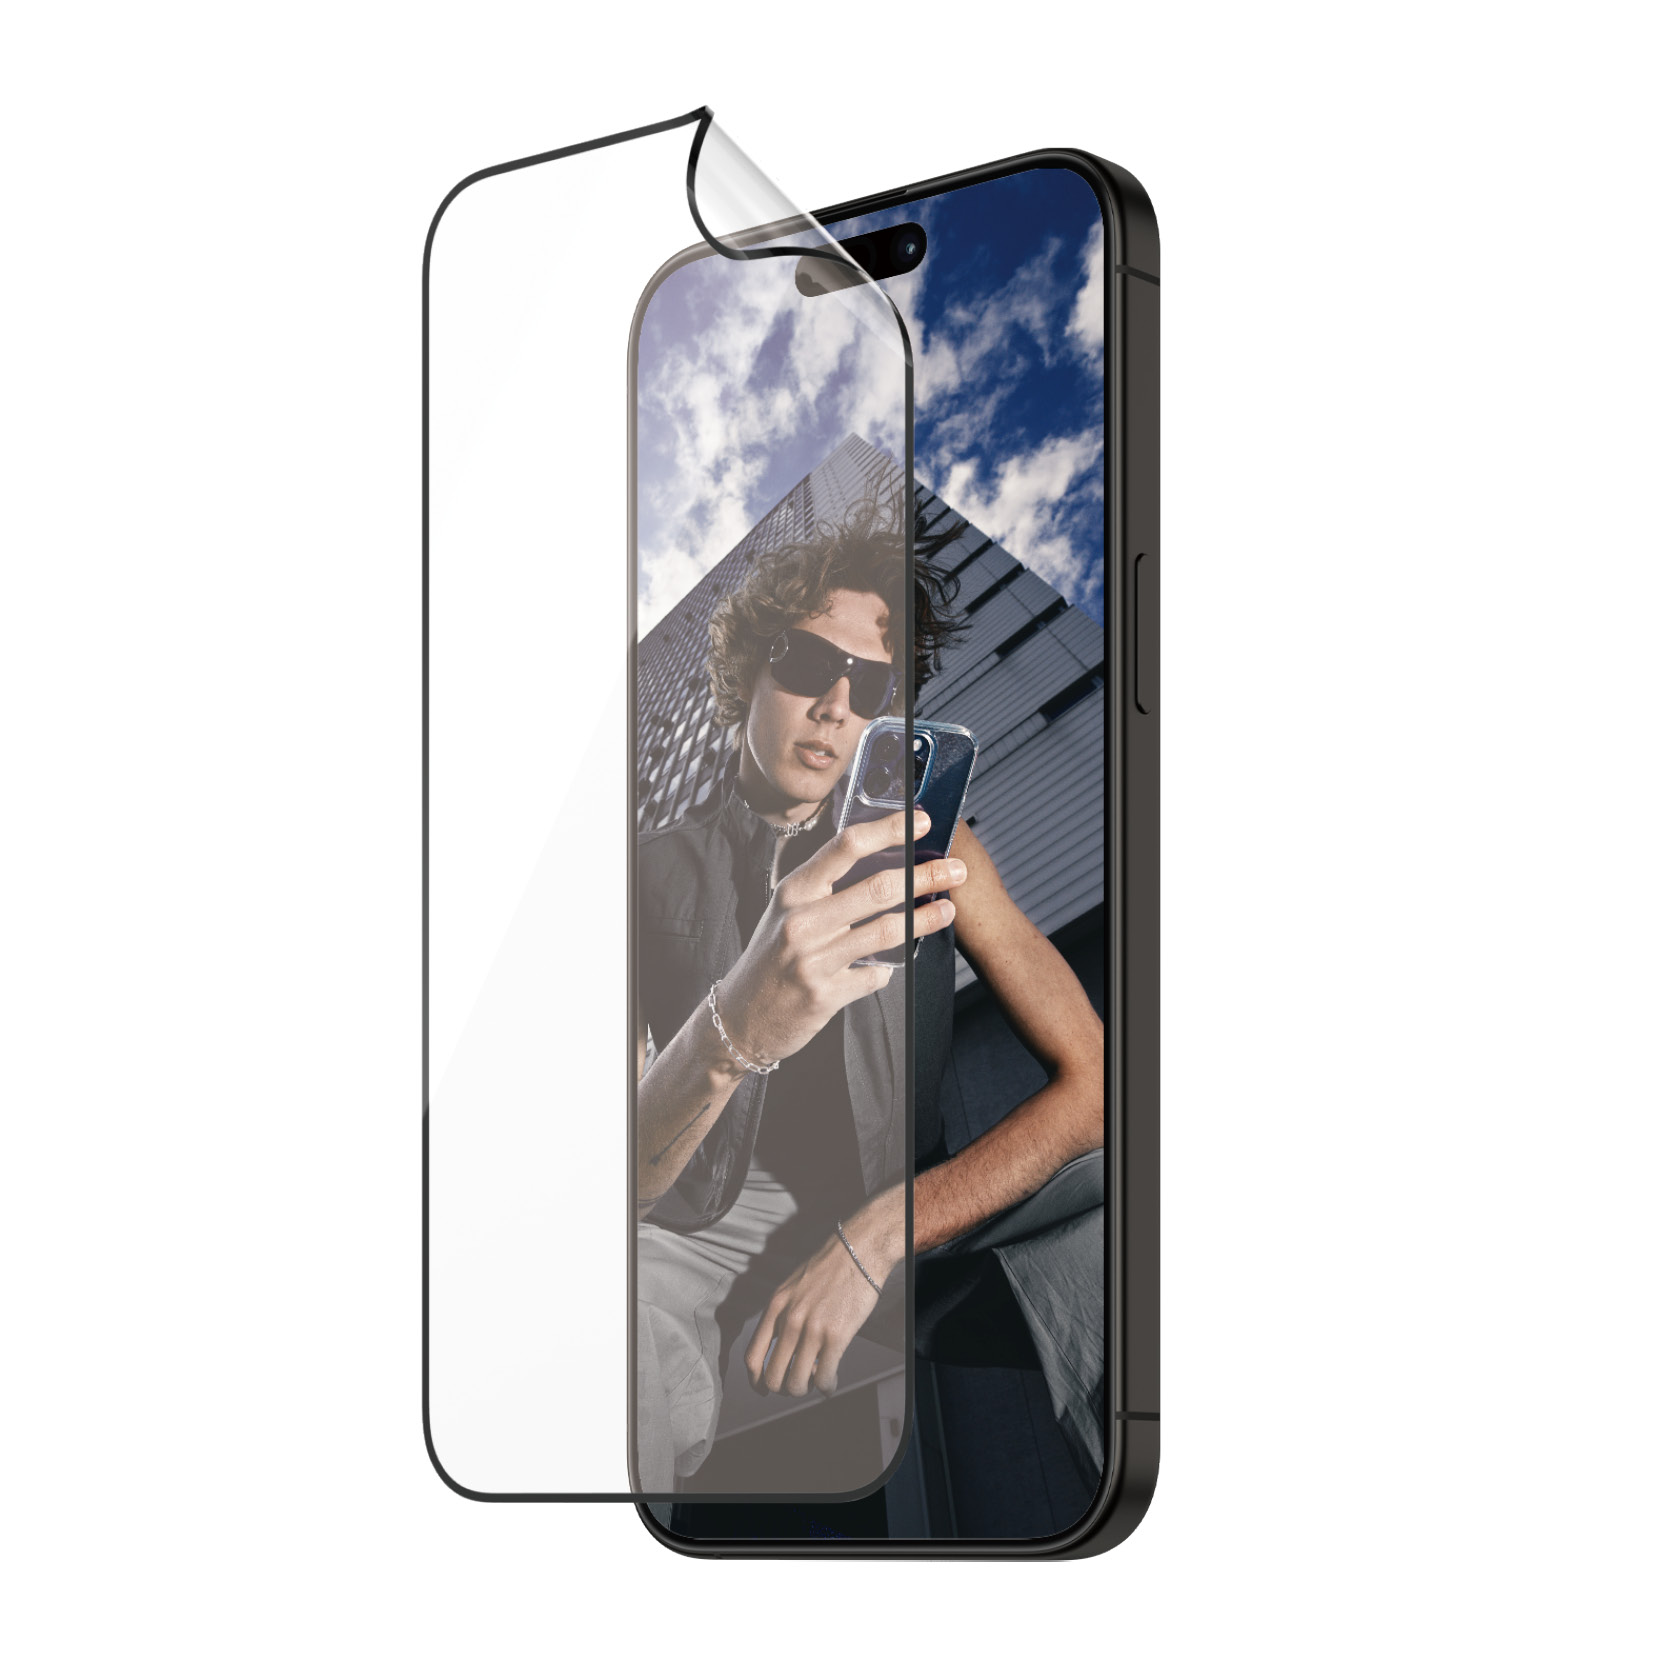 PANZER GLASS Ultra-Wide Fit MATRIX D3O iPhone 15 Pro Max kijelzővédő fólia applikátorral